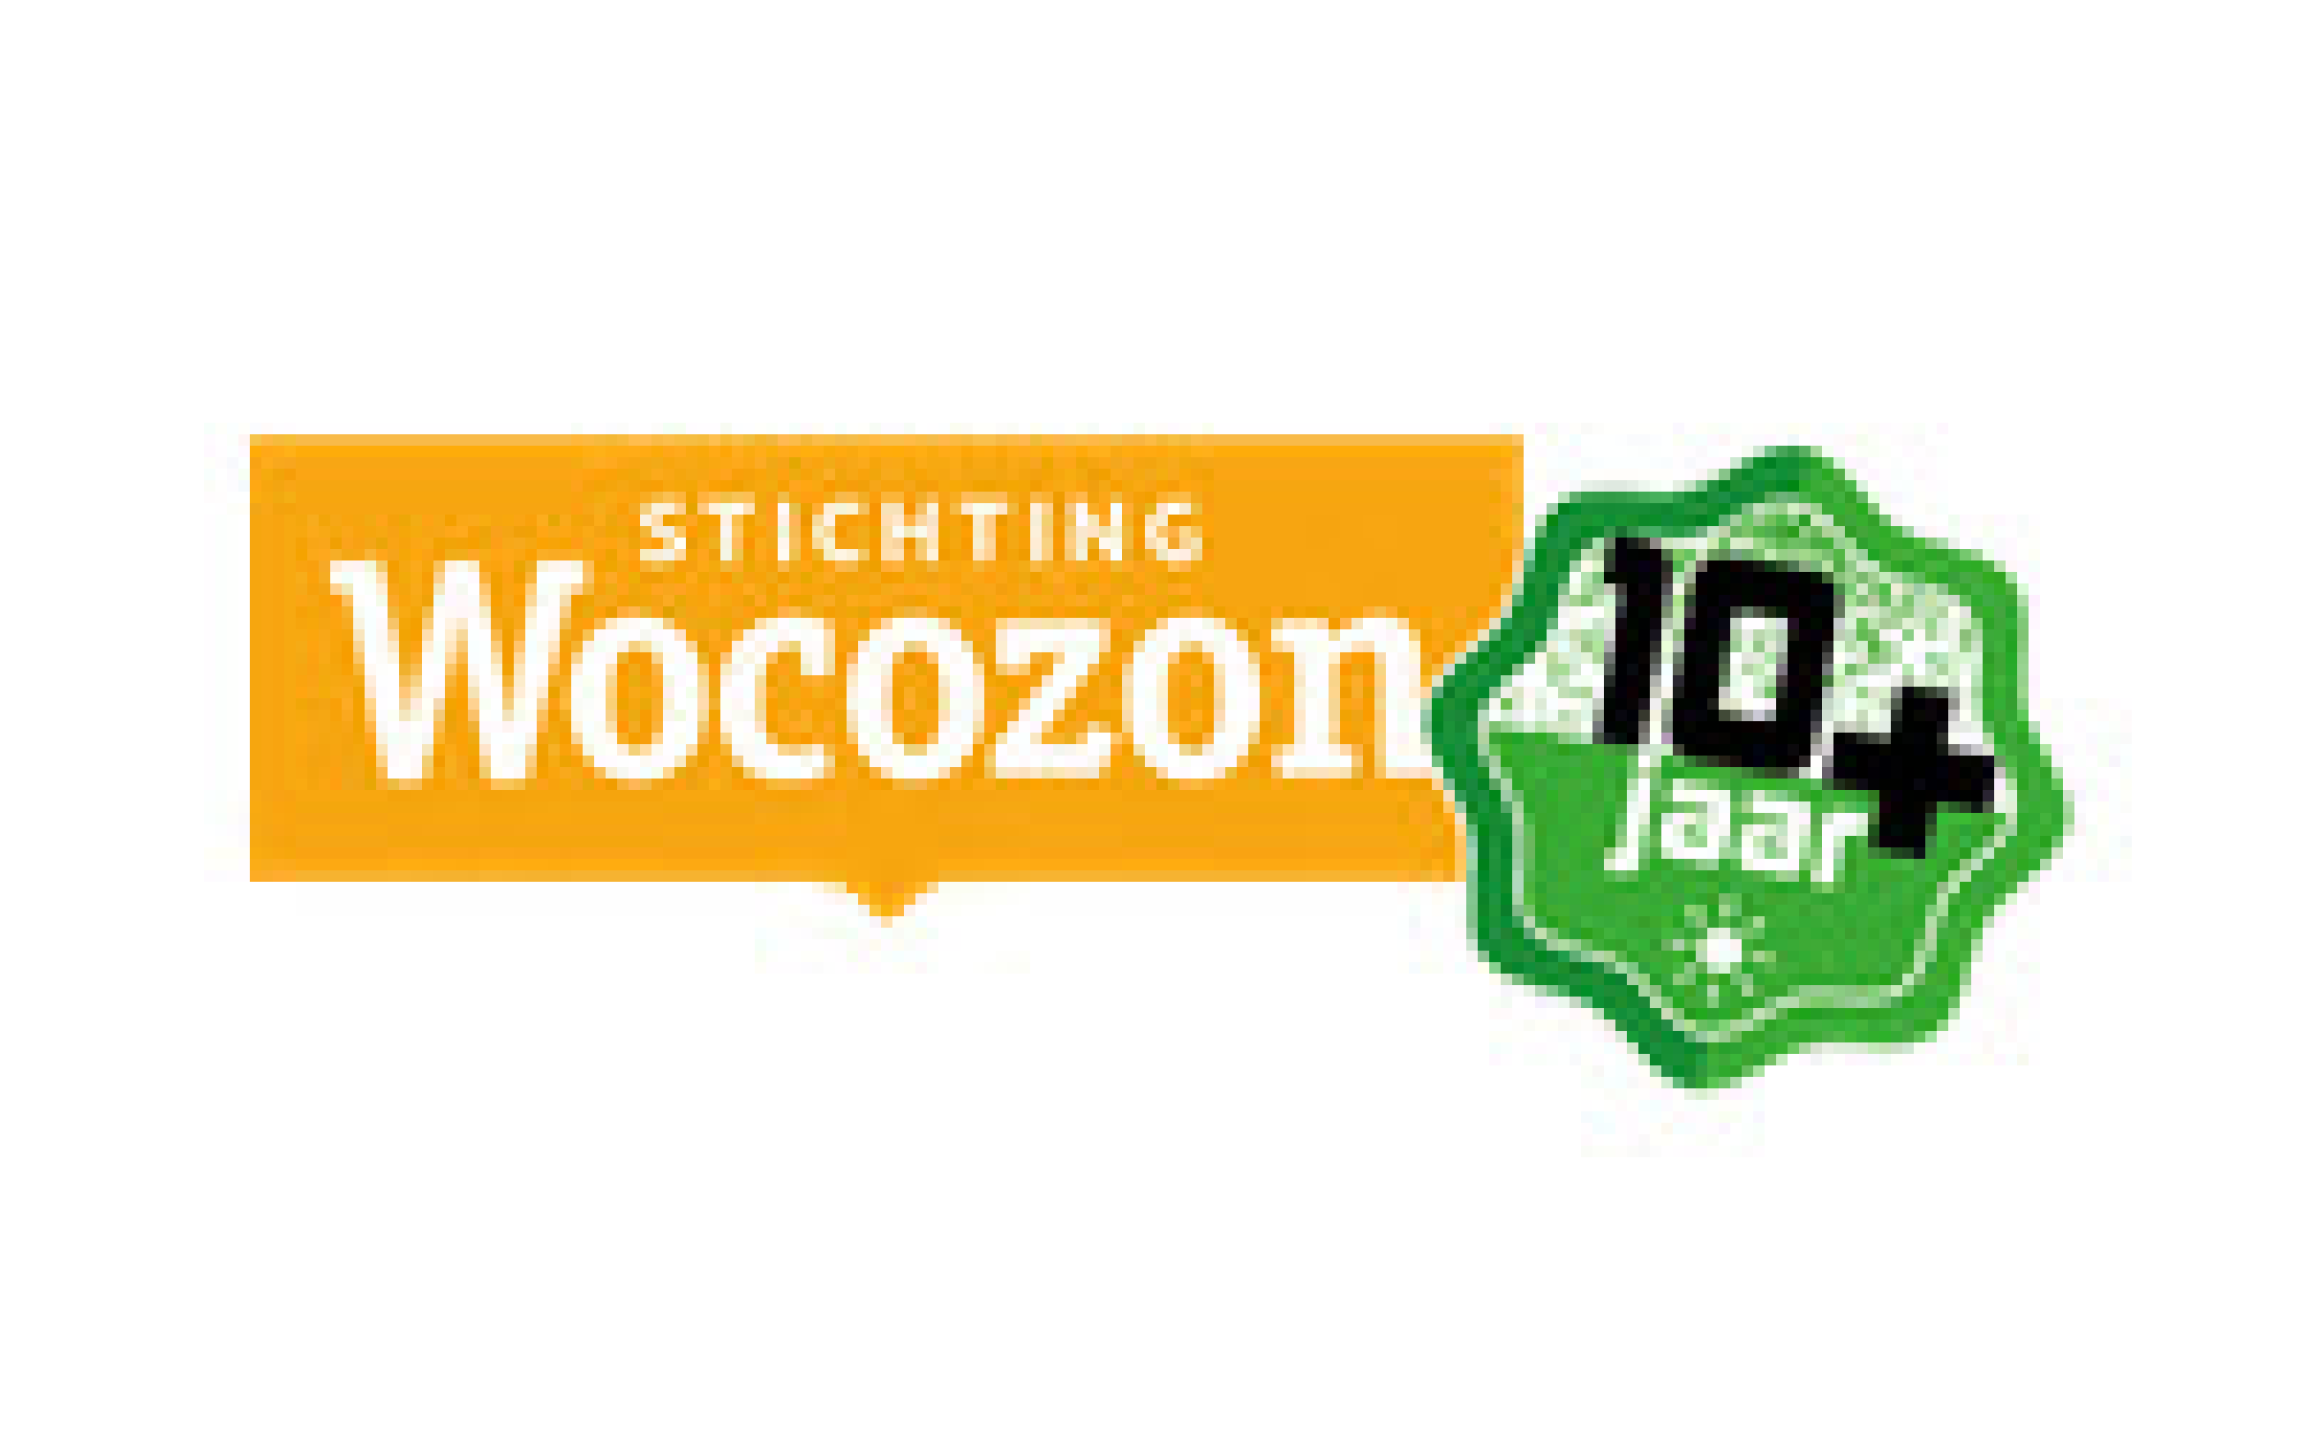 Wocozon